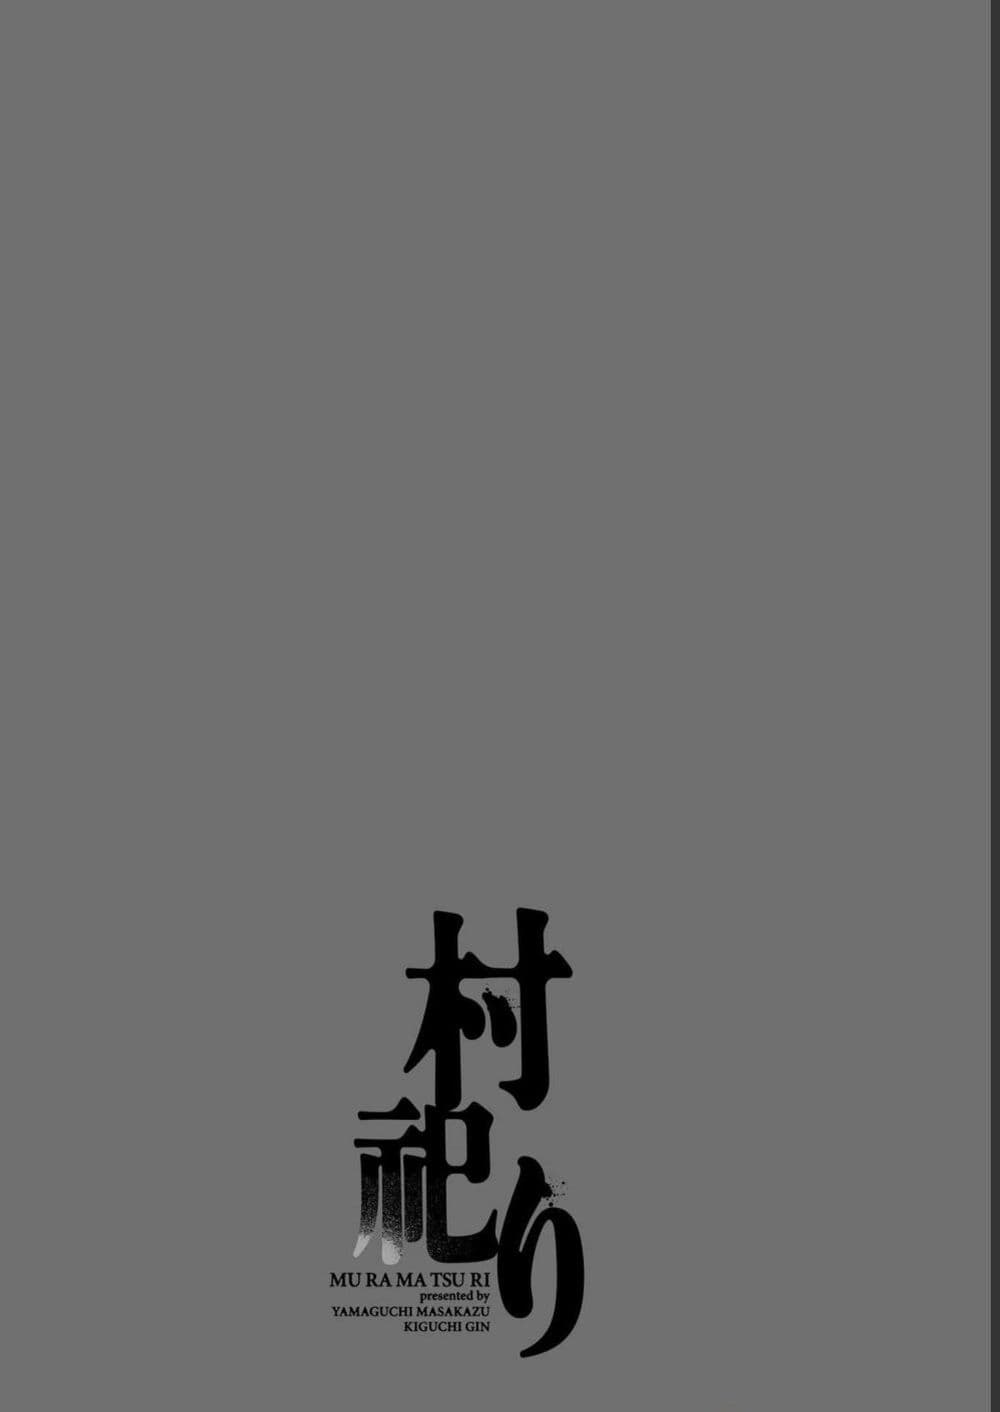 Mura Matsuri 19.11 (19)